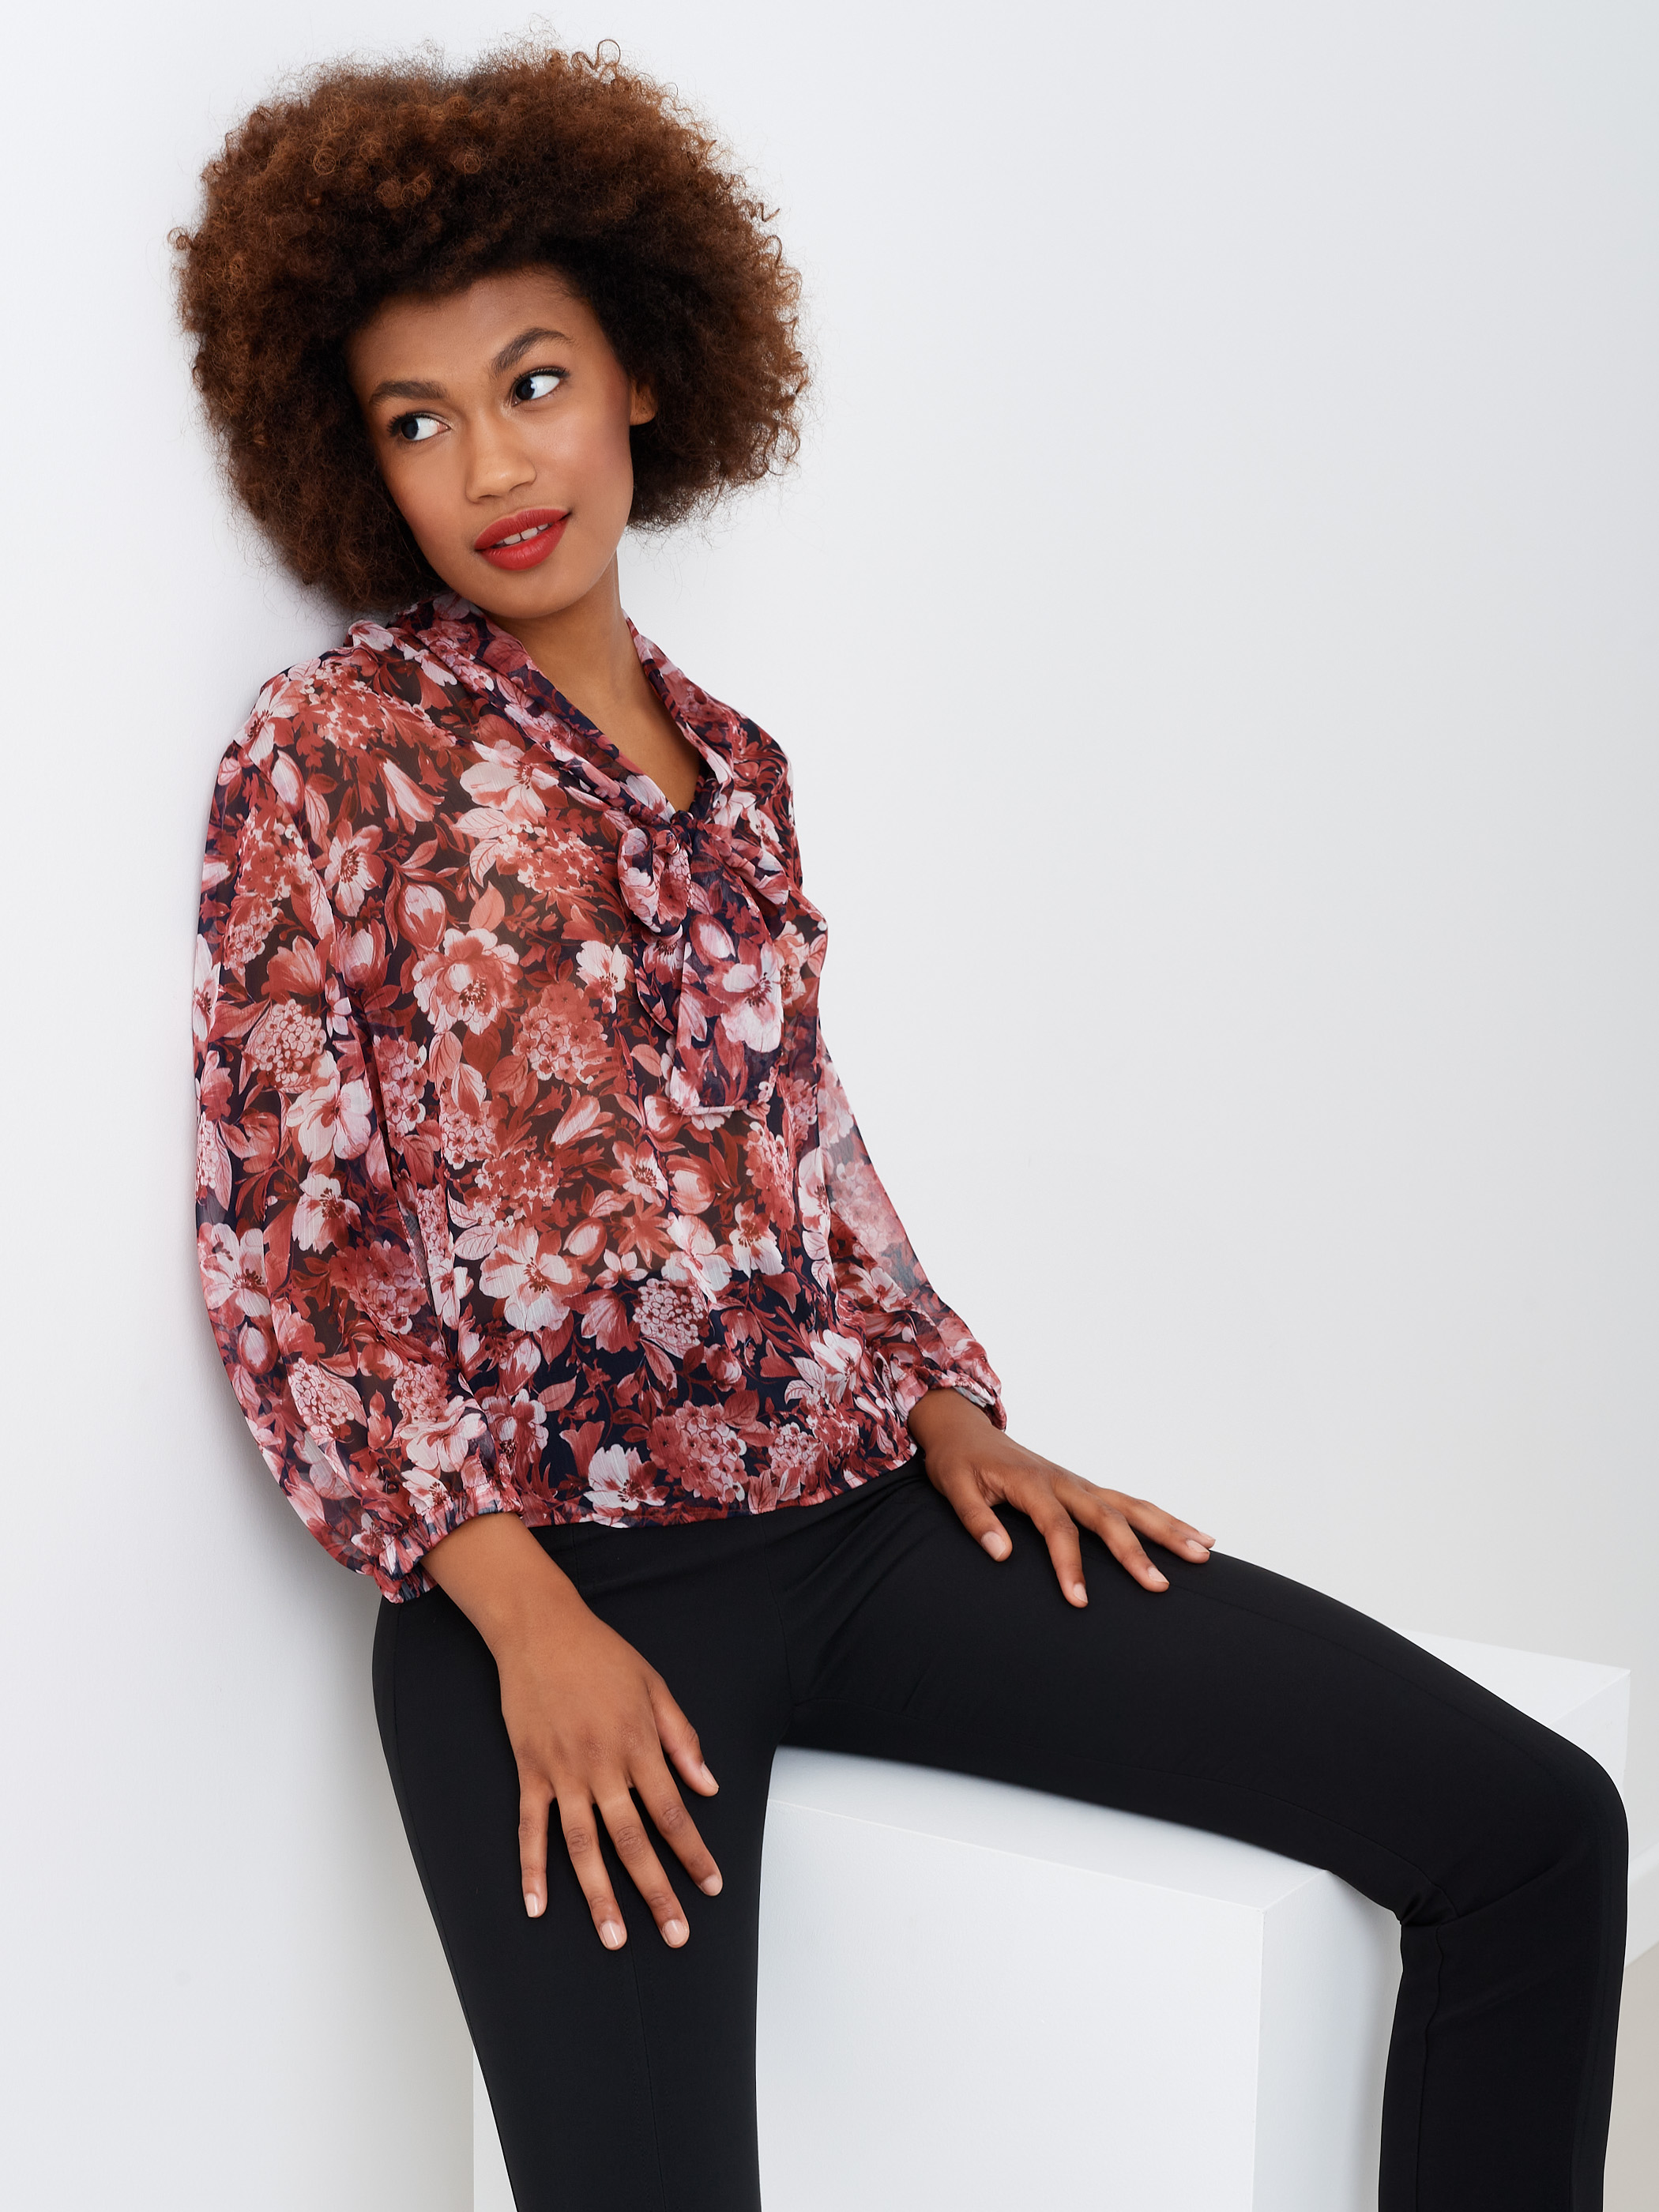 Rabatt 63 % DAMEN Hemden & T-Shirts Bluse Print Primark Bluse Rosa 36 